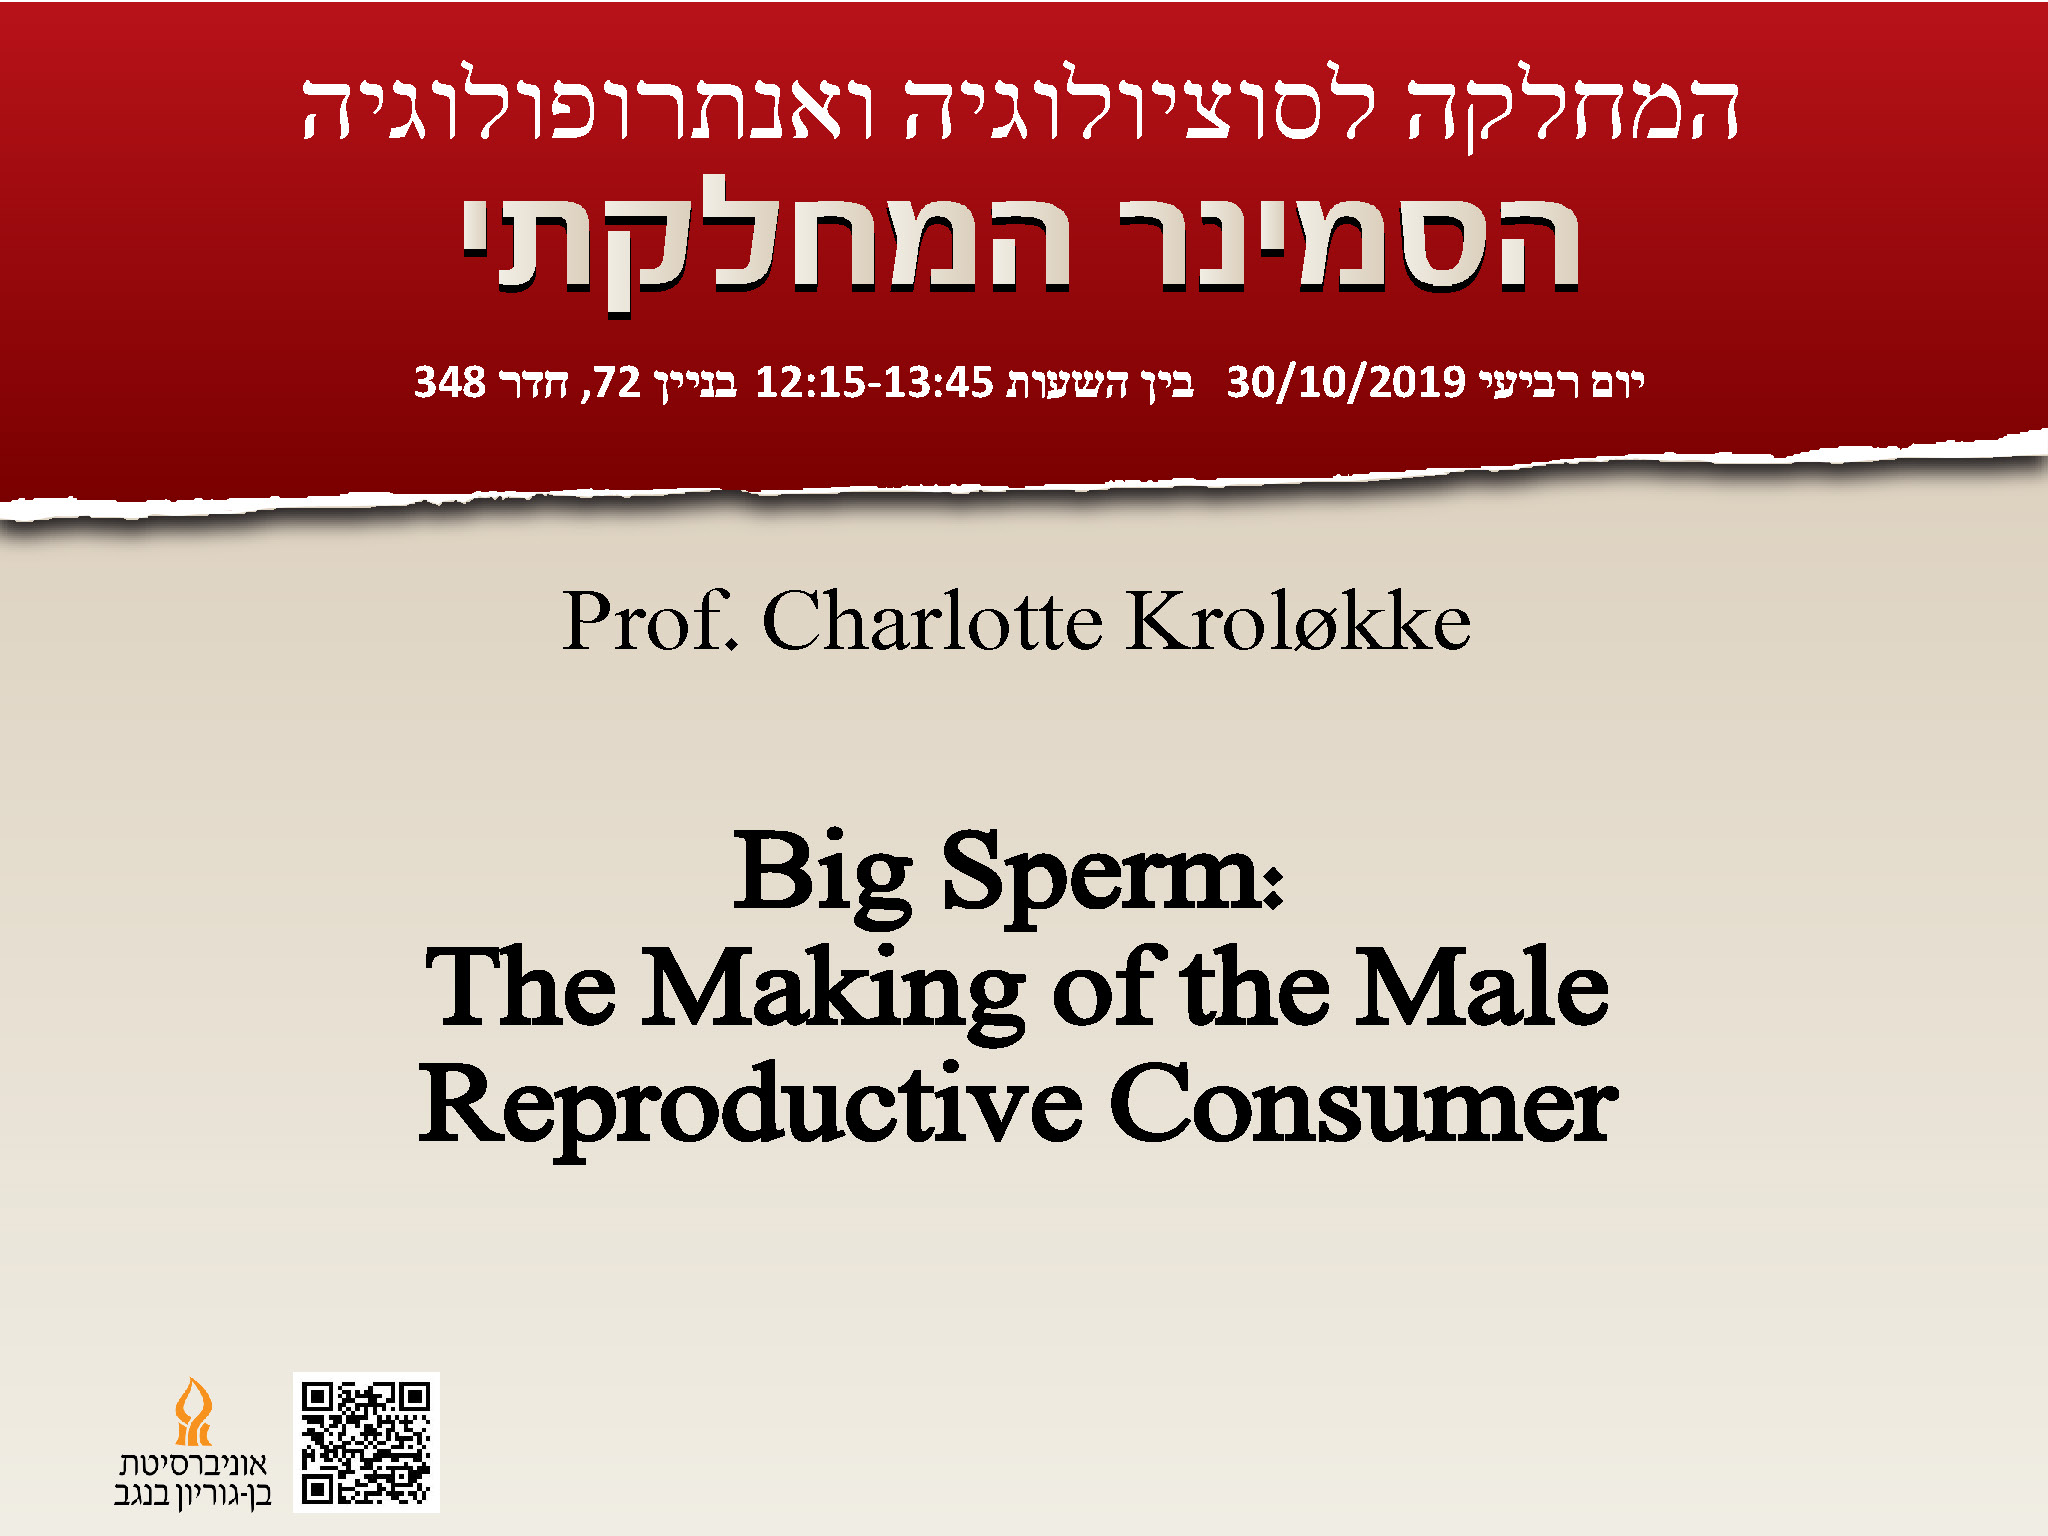 Prof. Charlotte Kroløkke - Big Sperm: The Making of the Male Reproductive Consumer